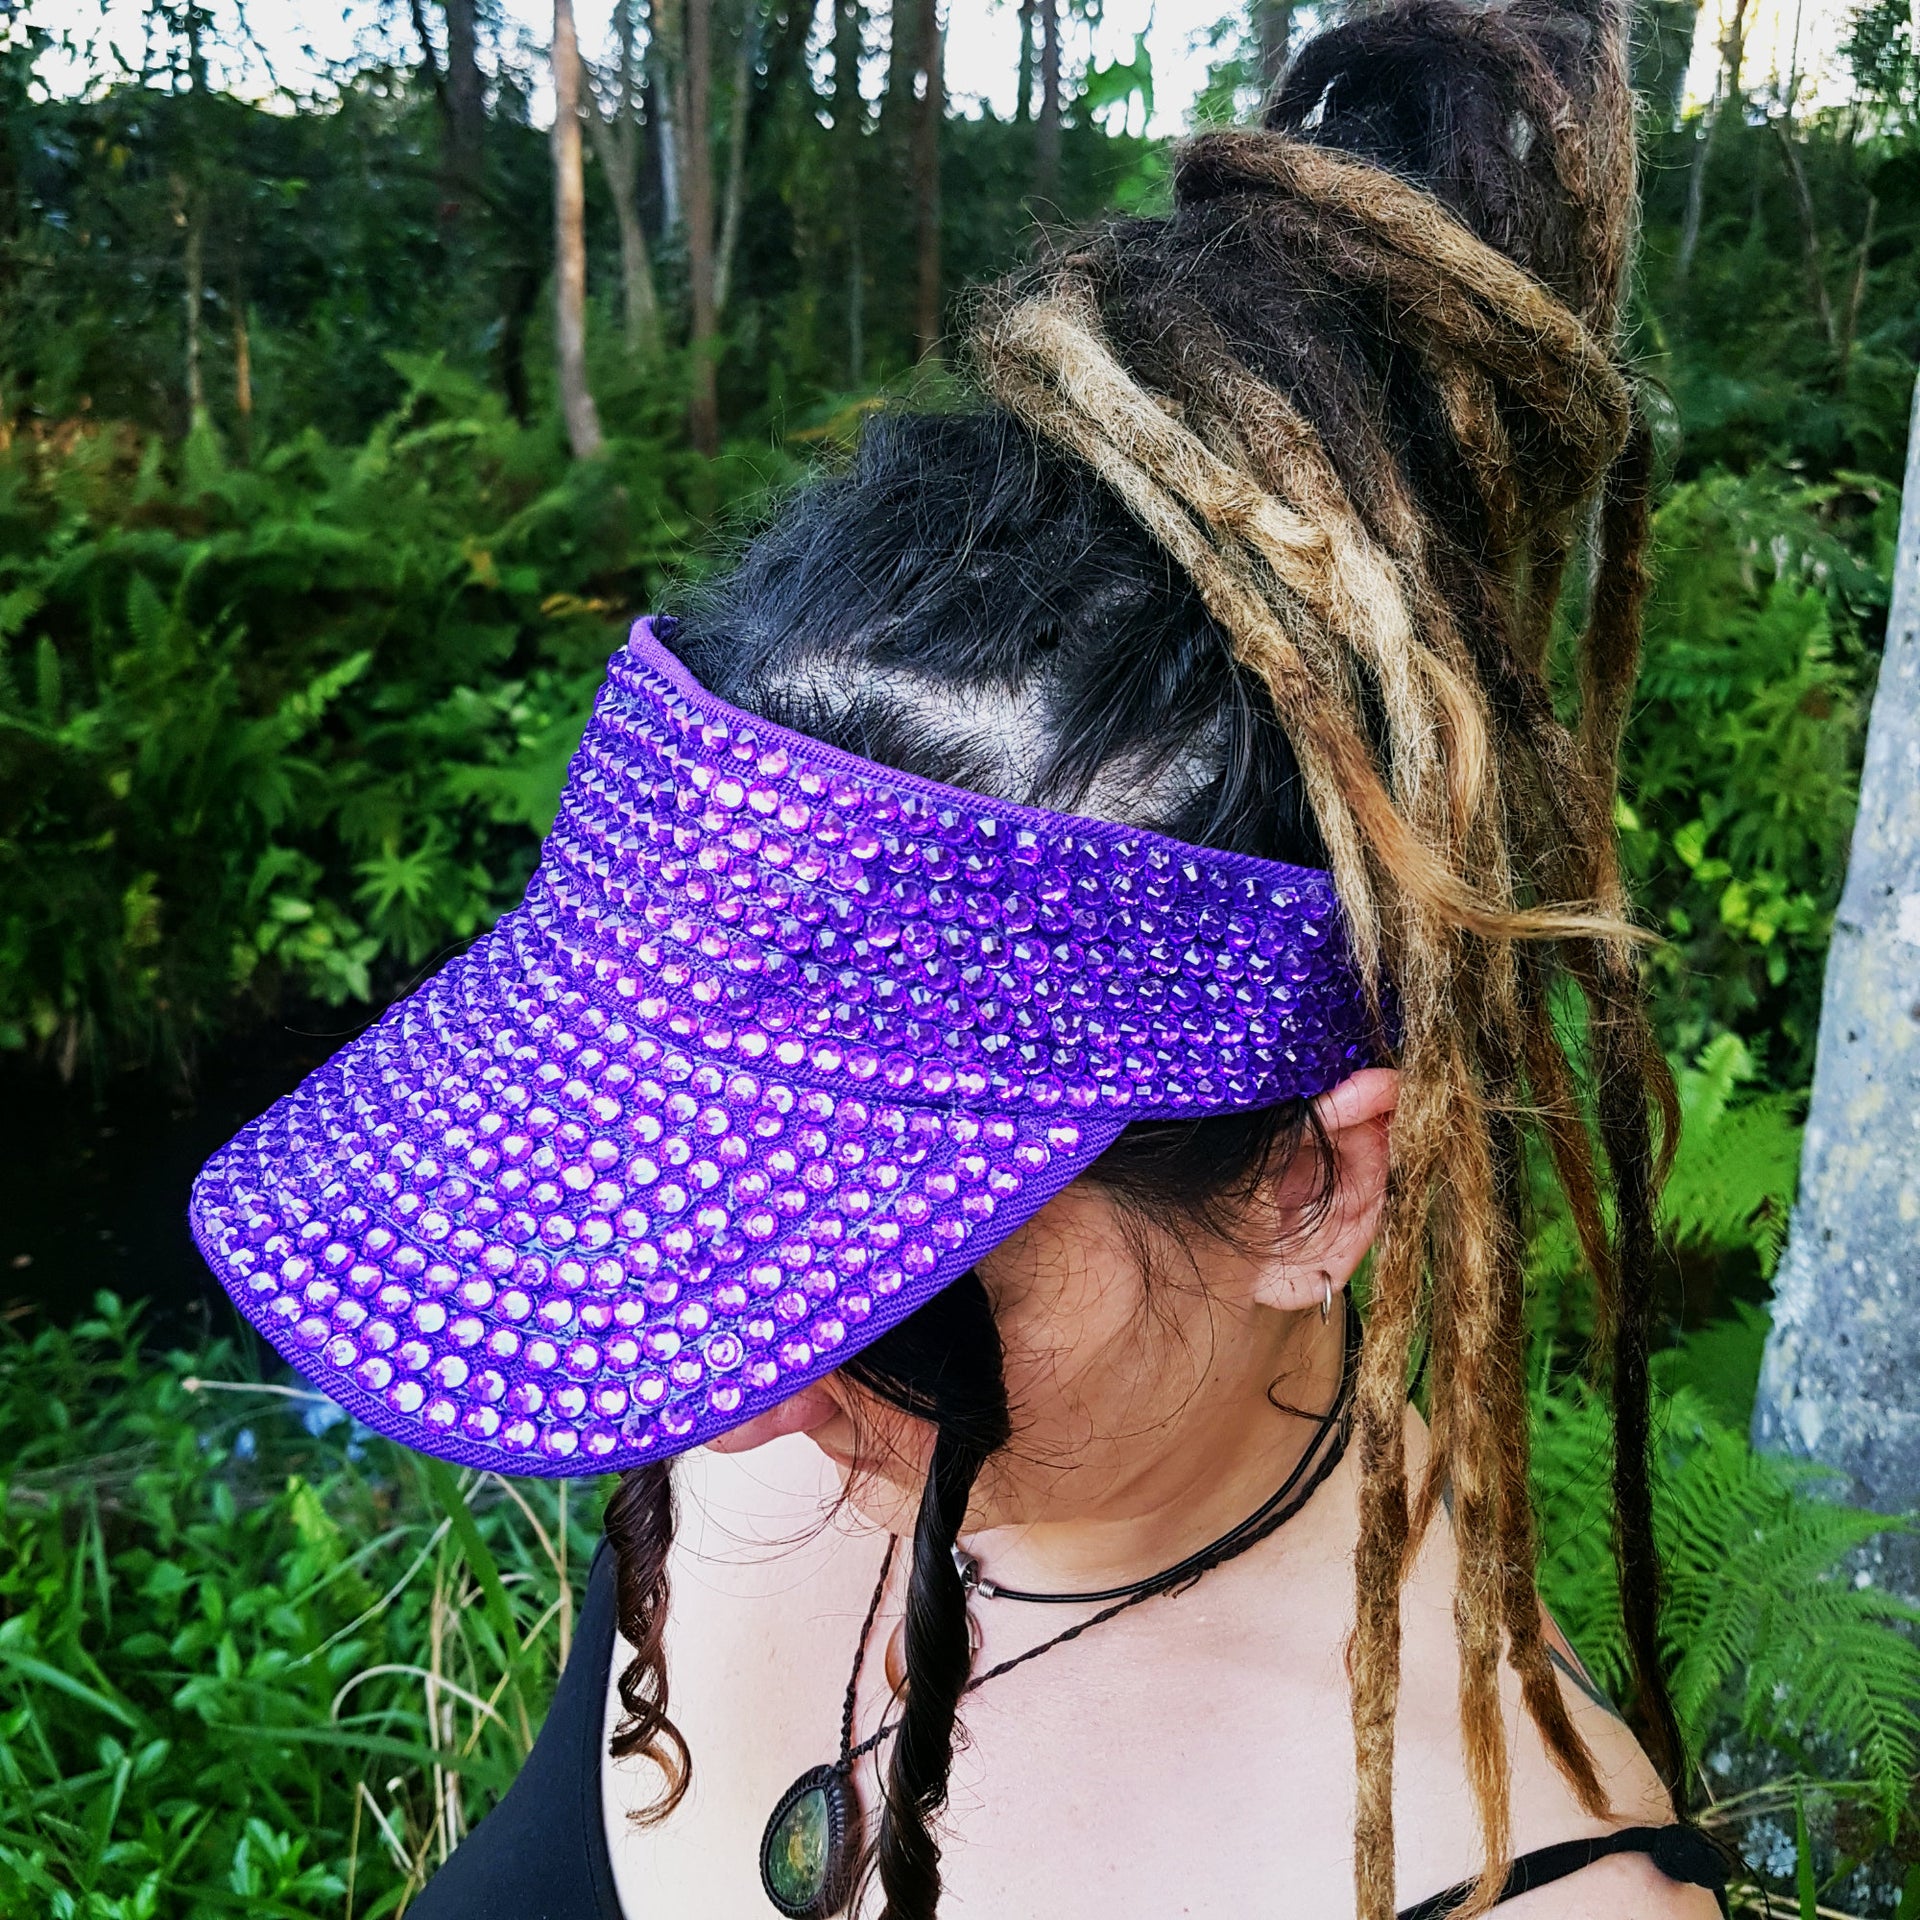 Purple sparkle visor hat for dreadlocks top view